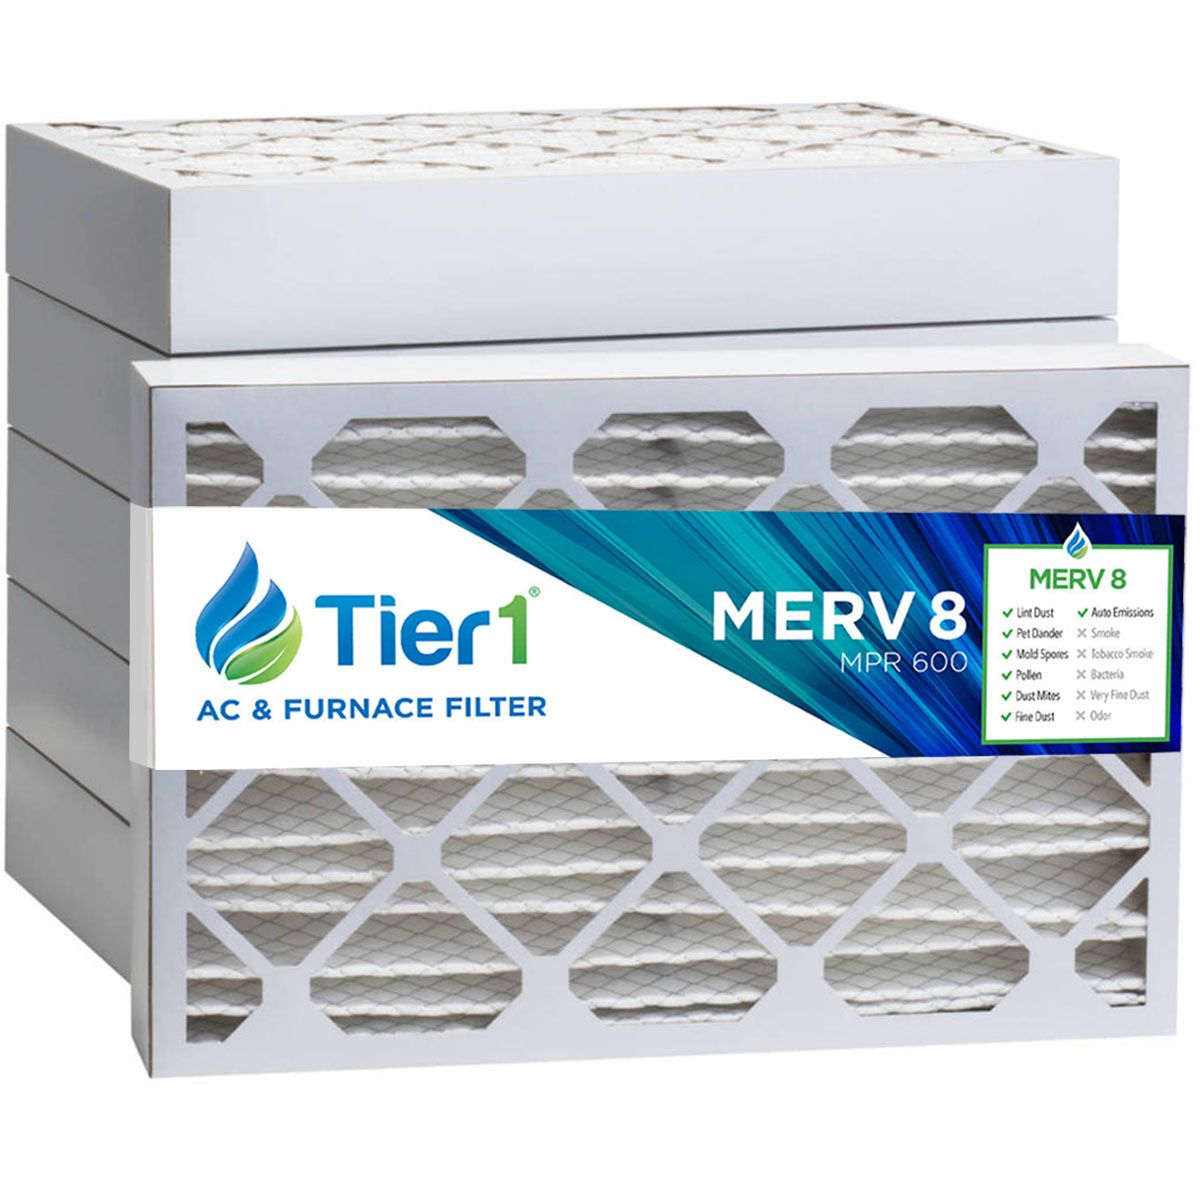 16x25x4 Merv 8 Universal Air Filter By Tier1 (Single Filter)